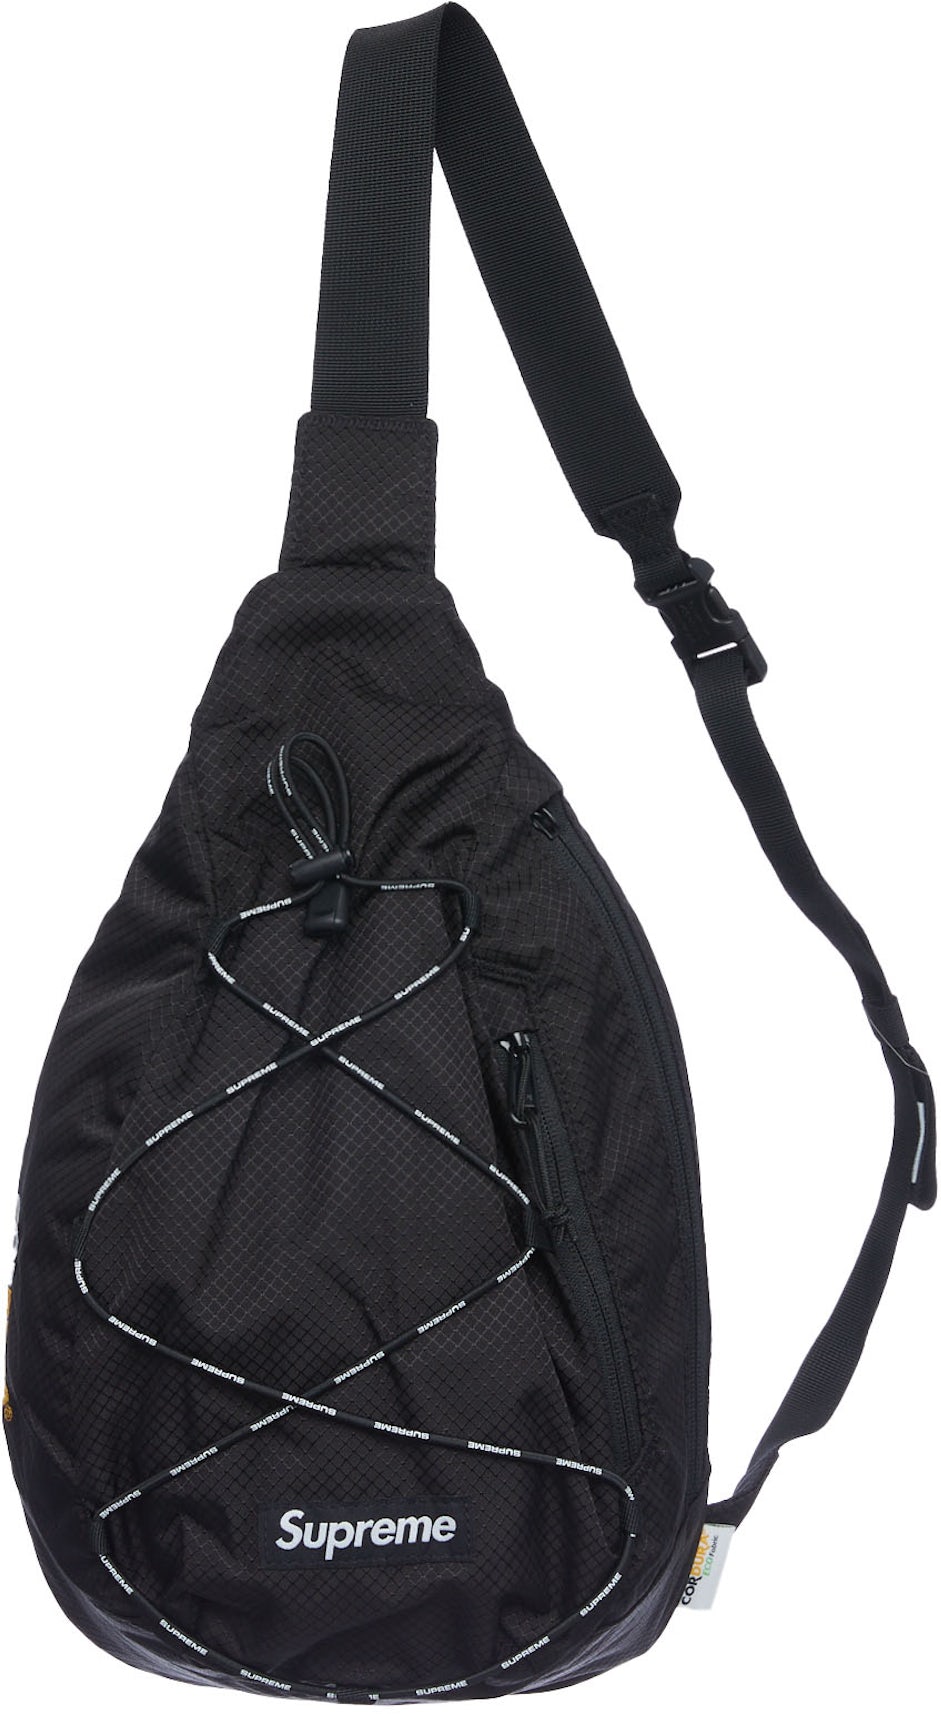 Mini Shield Sling Bag in Black - Women